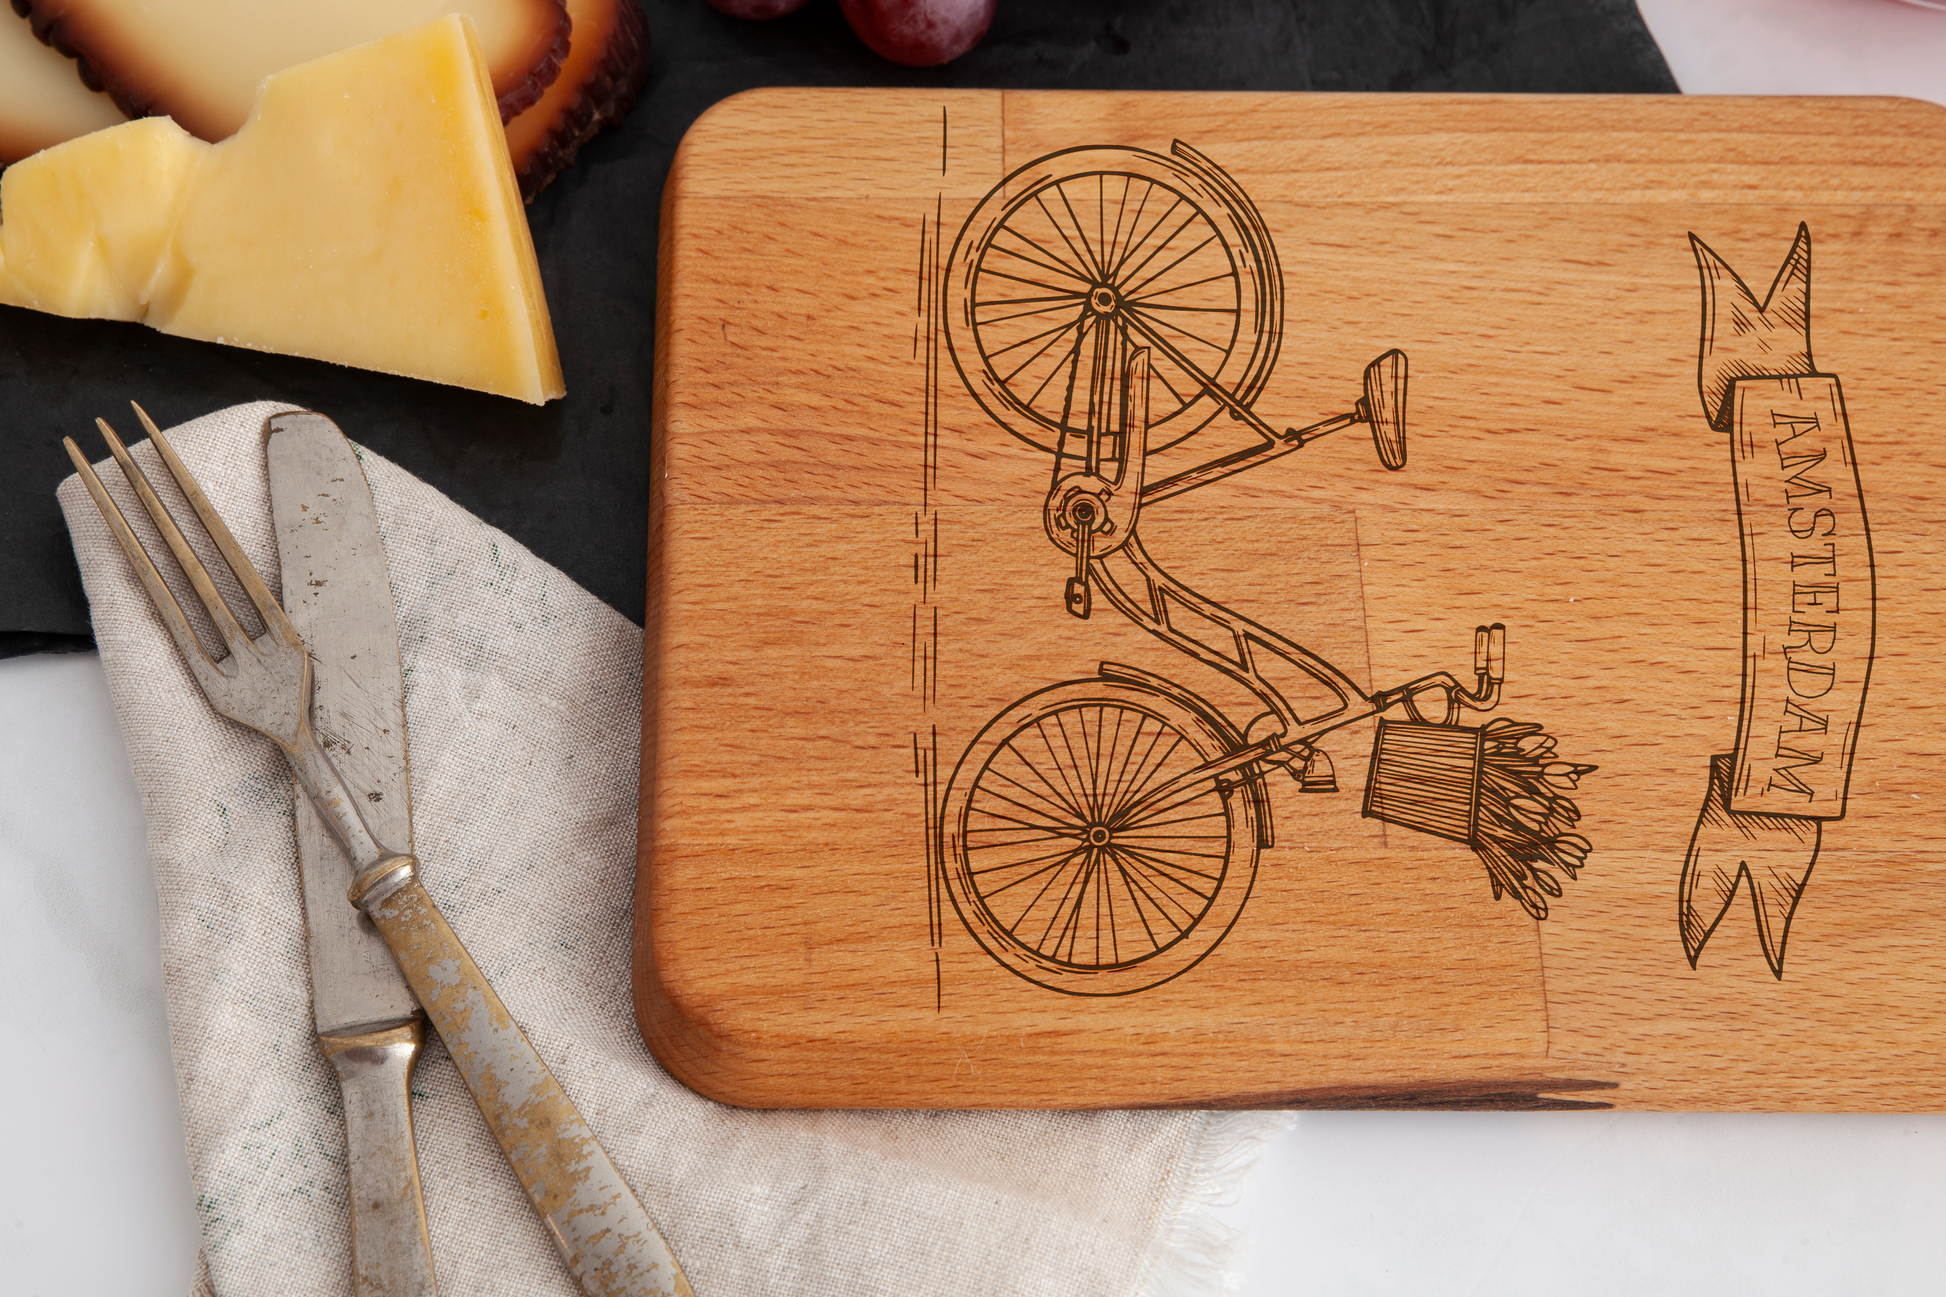 Amsterdam, Bicycle, cheese board, wood grain